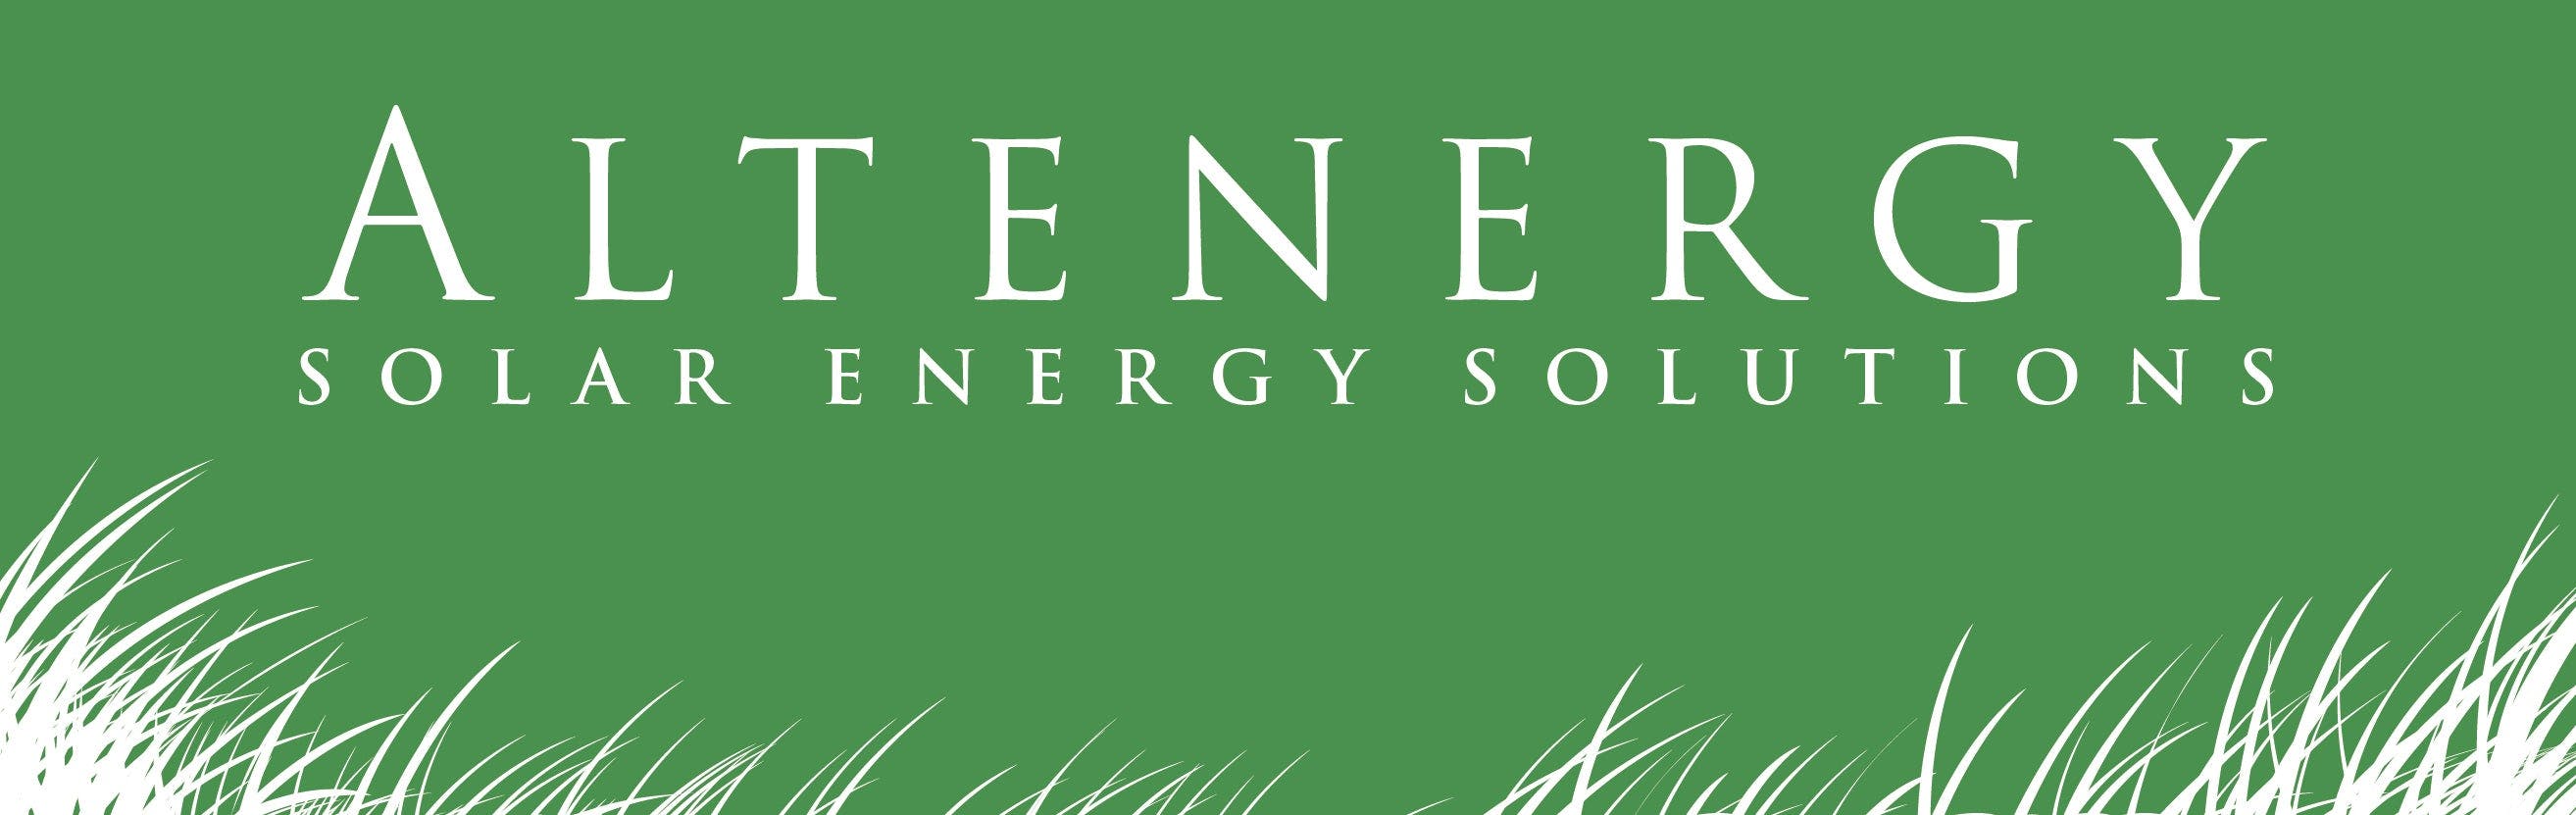 EnergyPal Altenergy Incorporated solar installer